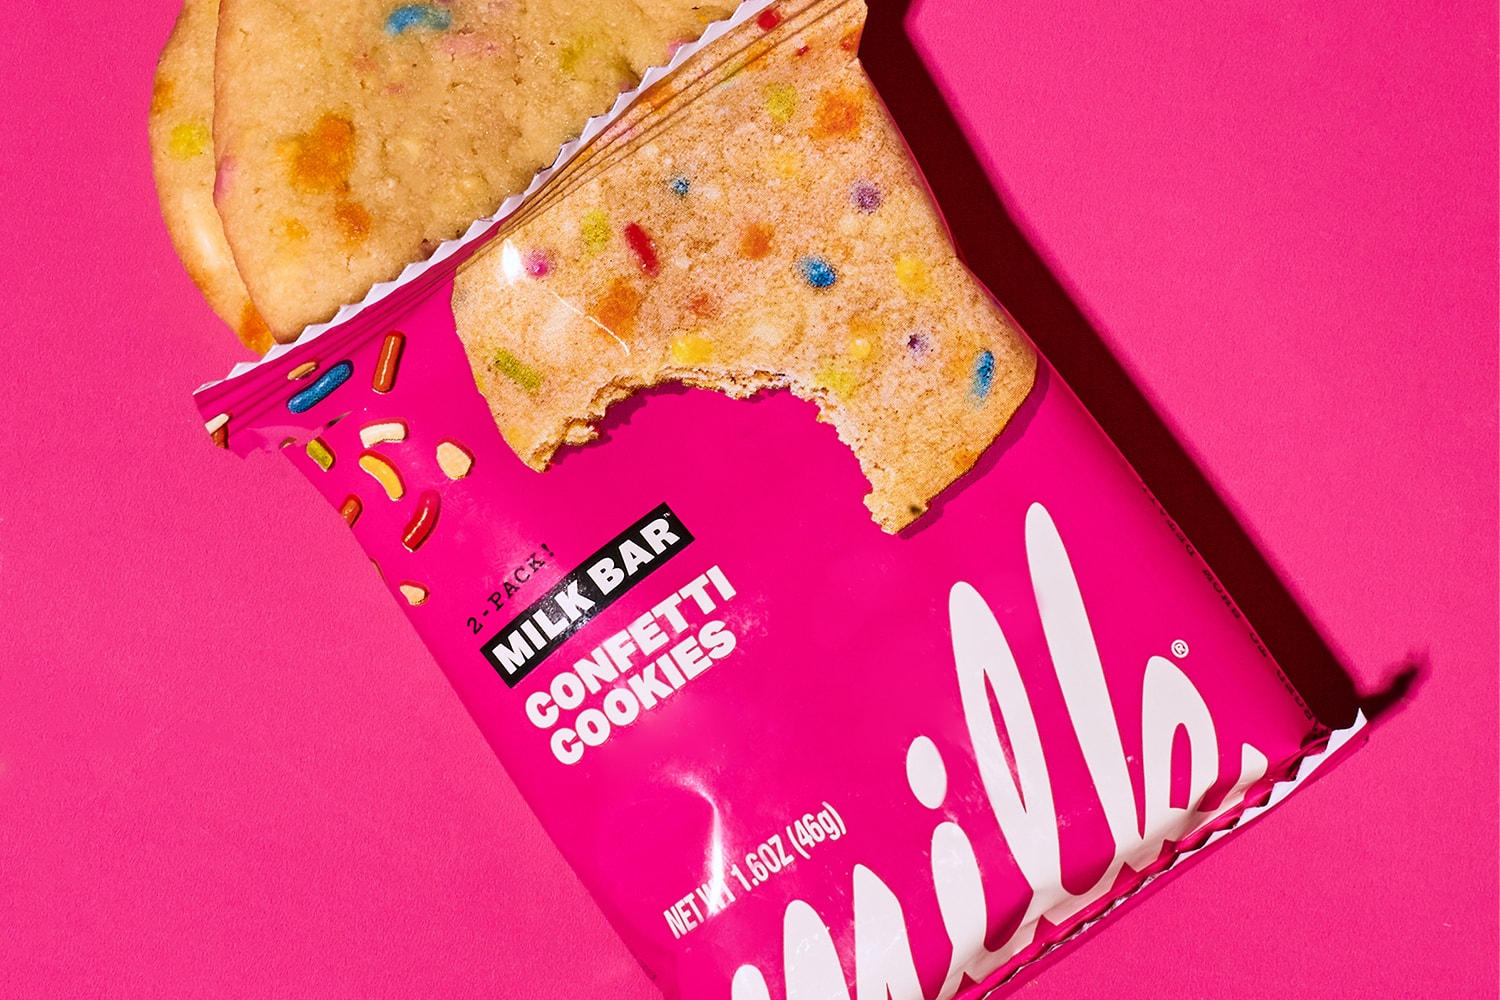 Milk Bar Truffle Crumb Cakes Cookies Target Release Info Buy Price Date Where Store